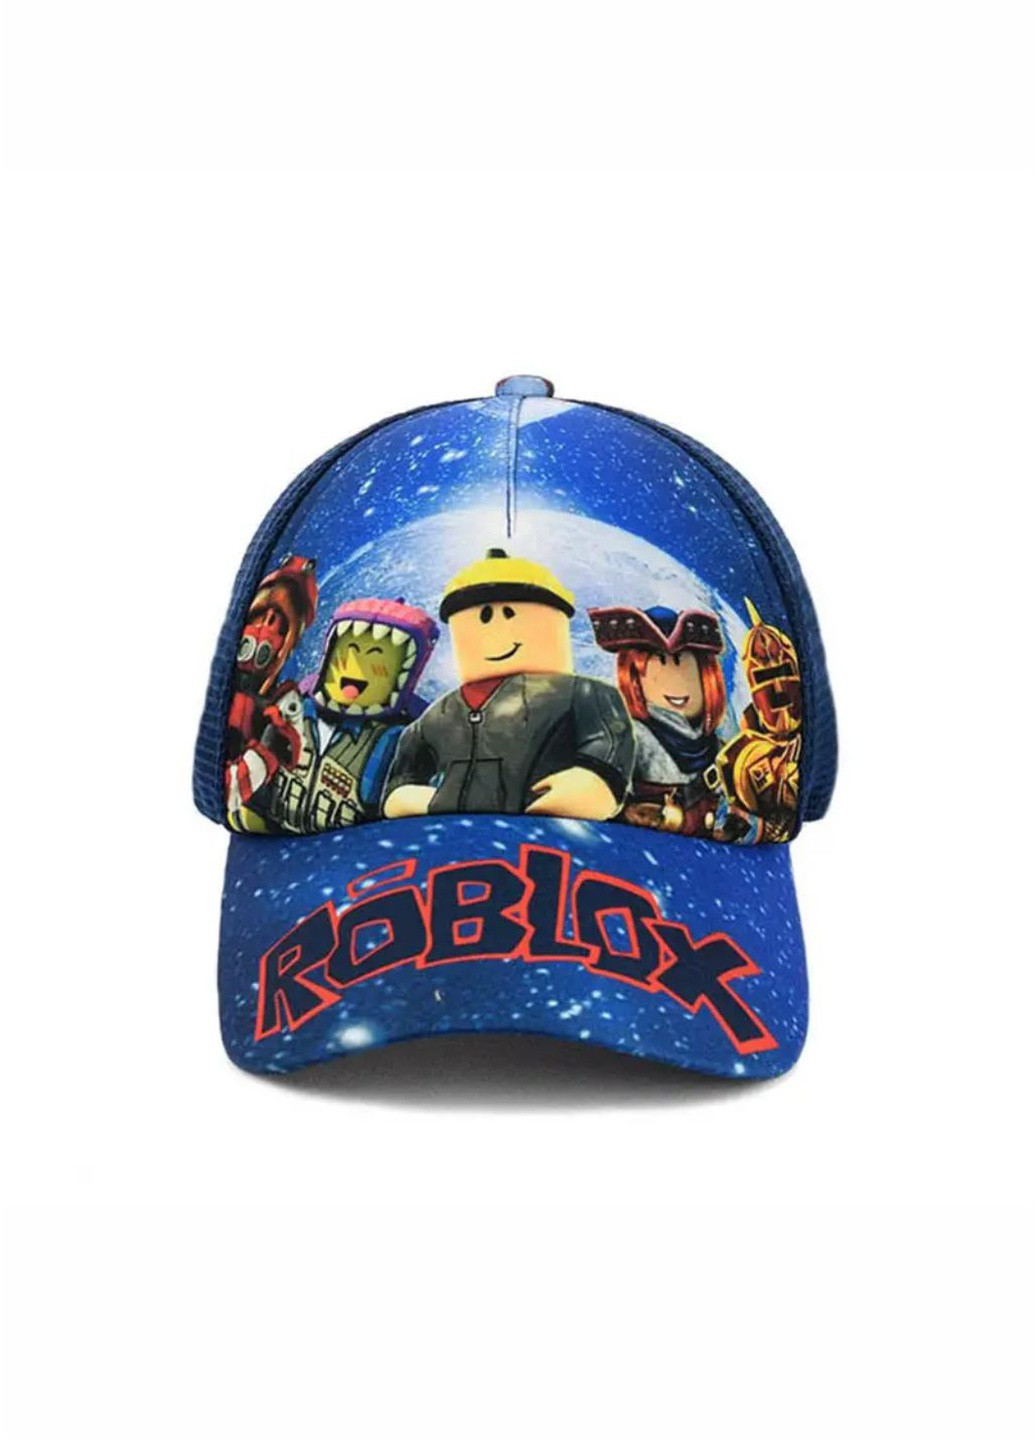 Дитяча кепка з сіткою Роблокс () one-size Roblox кепка с сеткой (257949450)